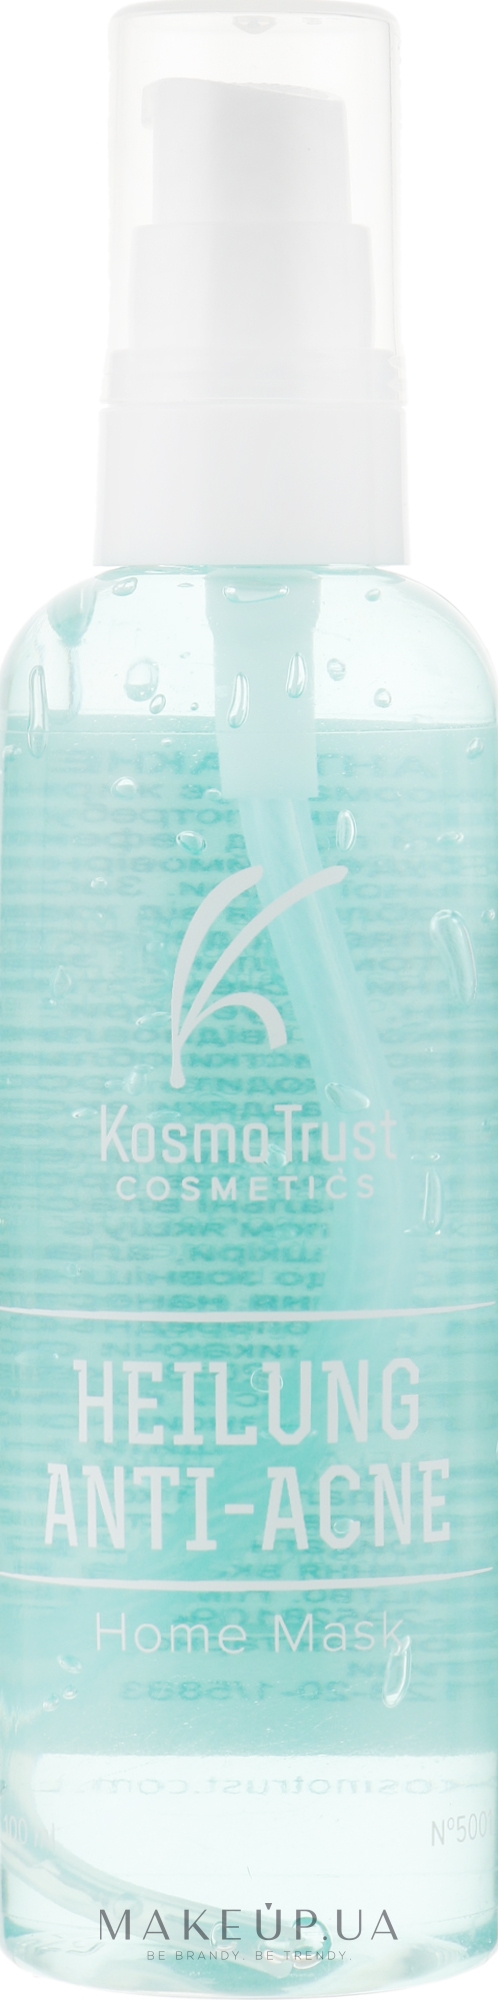 Маска для лица анти-акне лечебная - KosmoTrust Cosmetics Heilung Anti-Acne Home Mask — фото 100ml